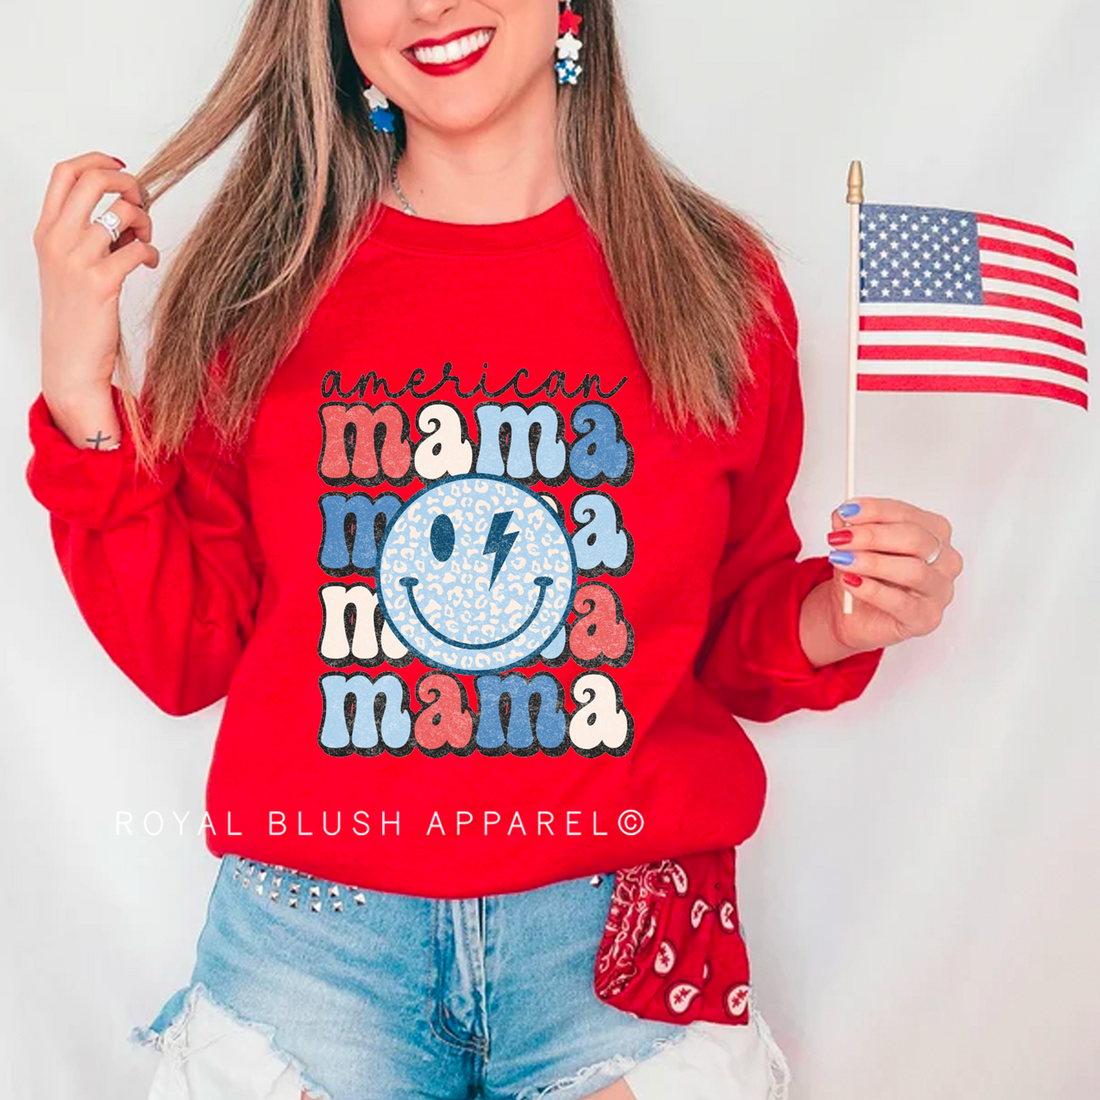 American Mama Full Color Transfer